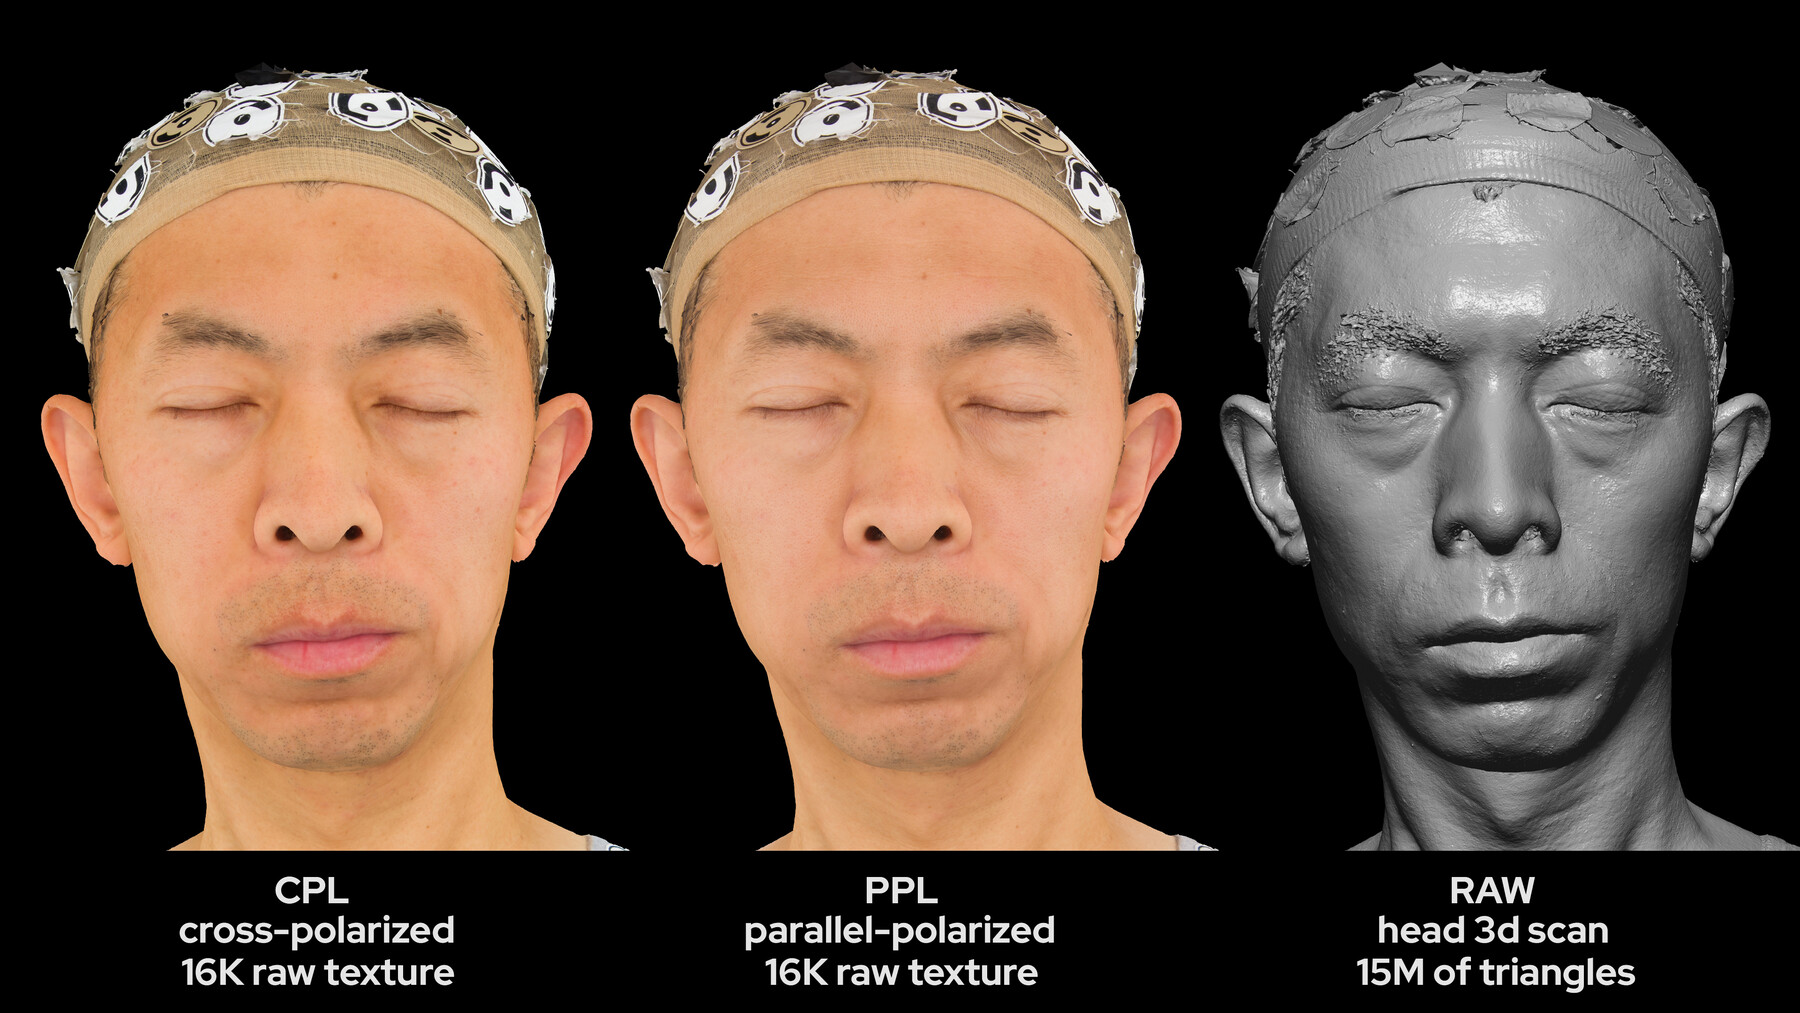 ArtStation - Asian Male 40s head scan 045 | Game Assets